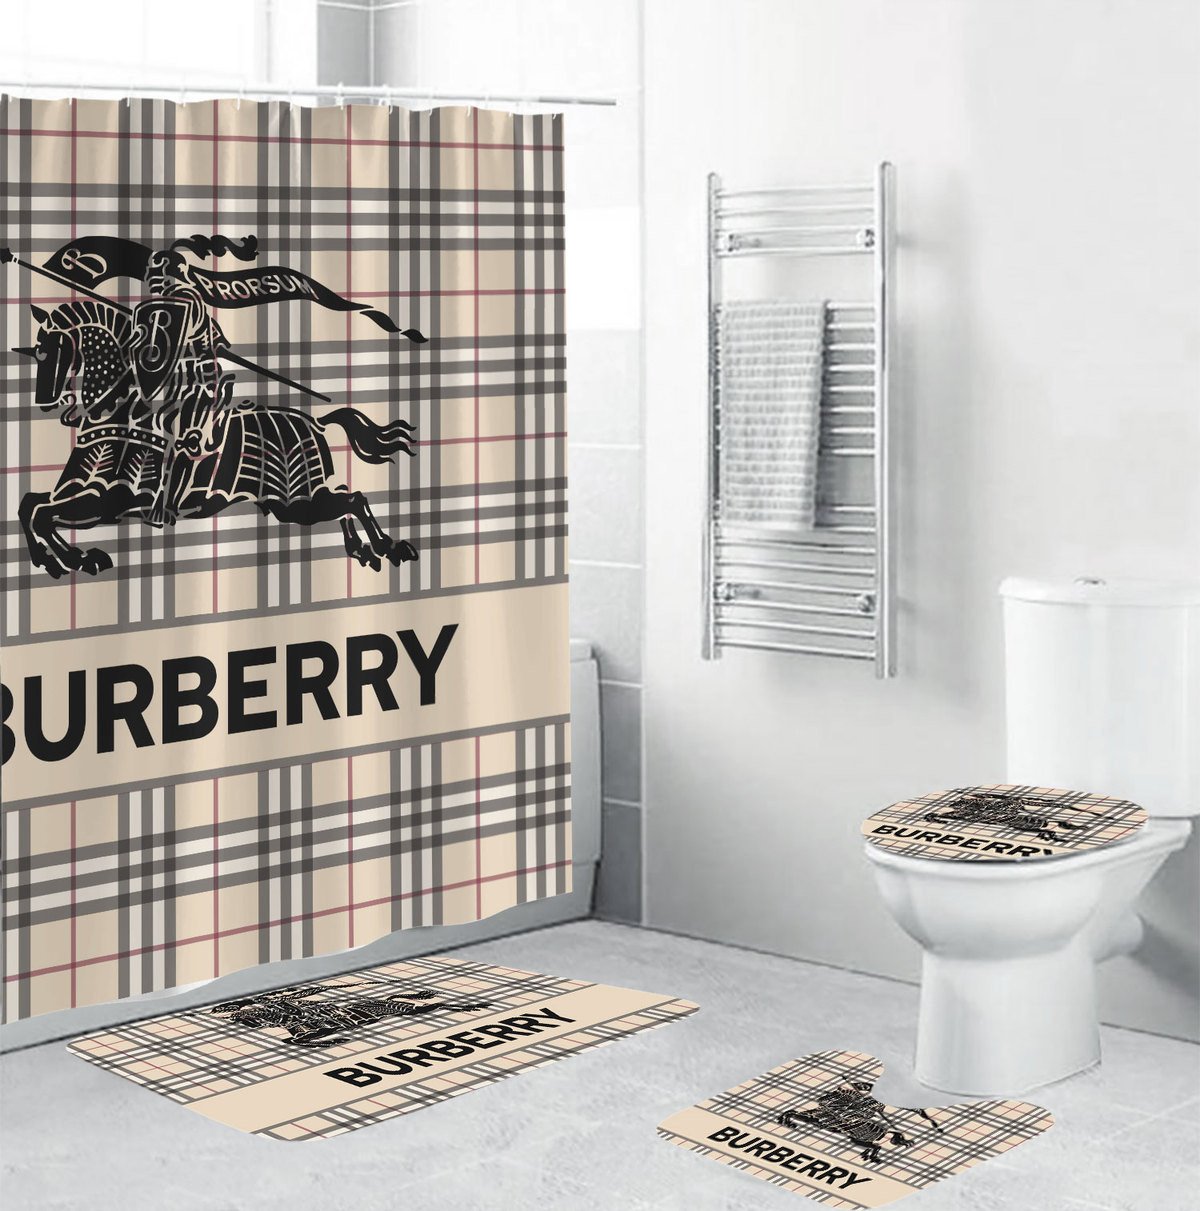 Burberry Bathroom Sets